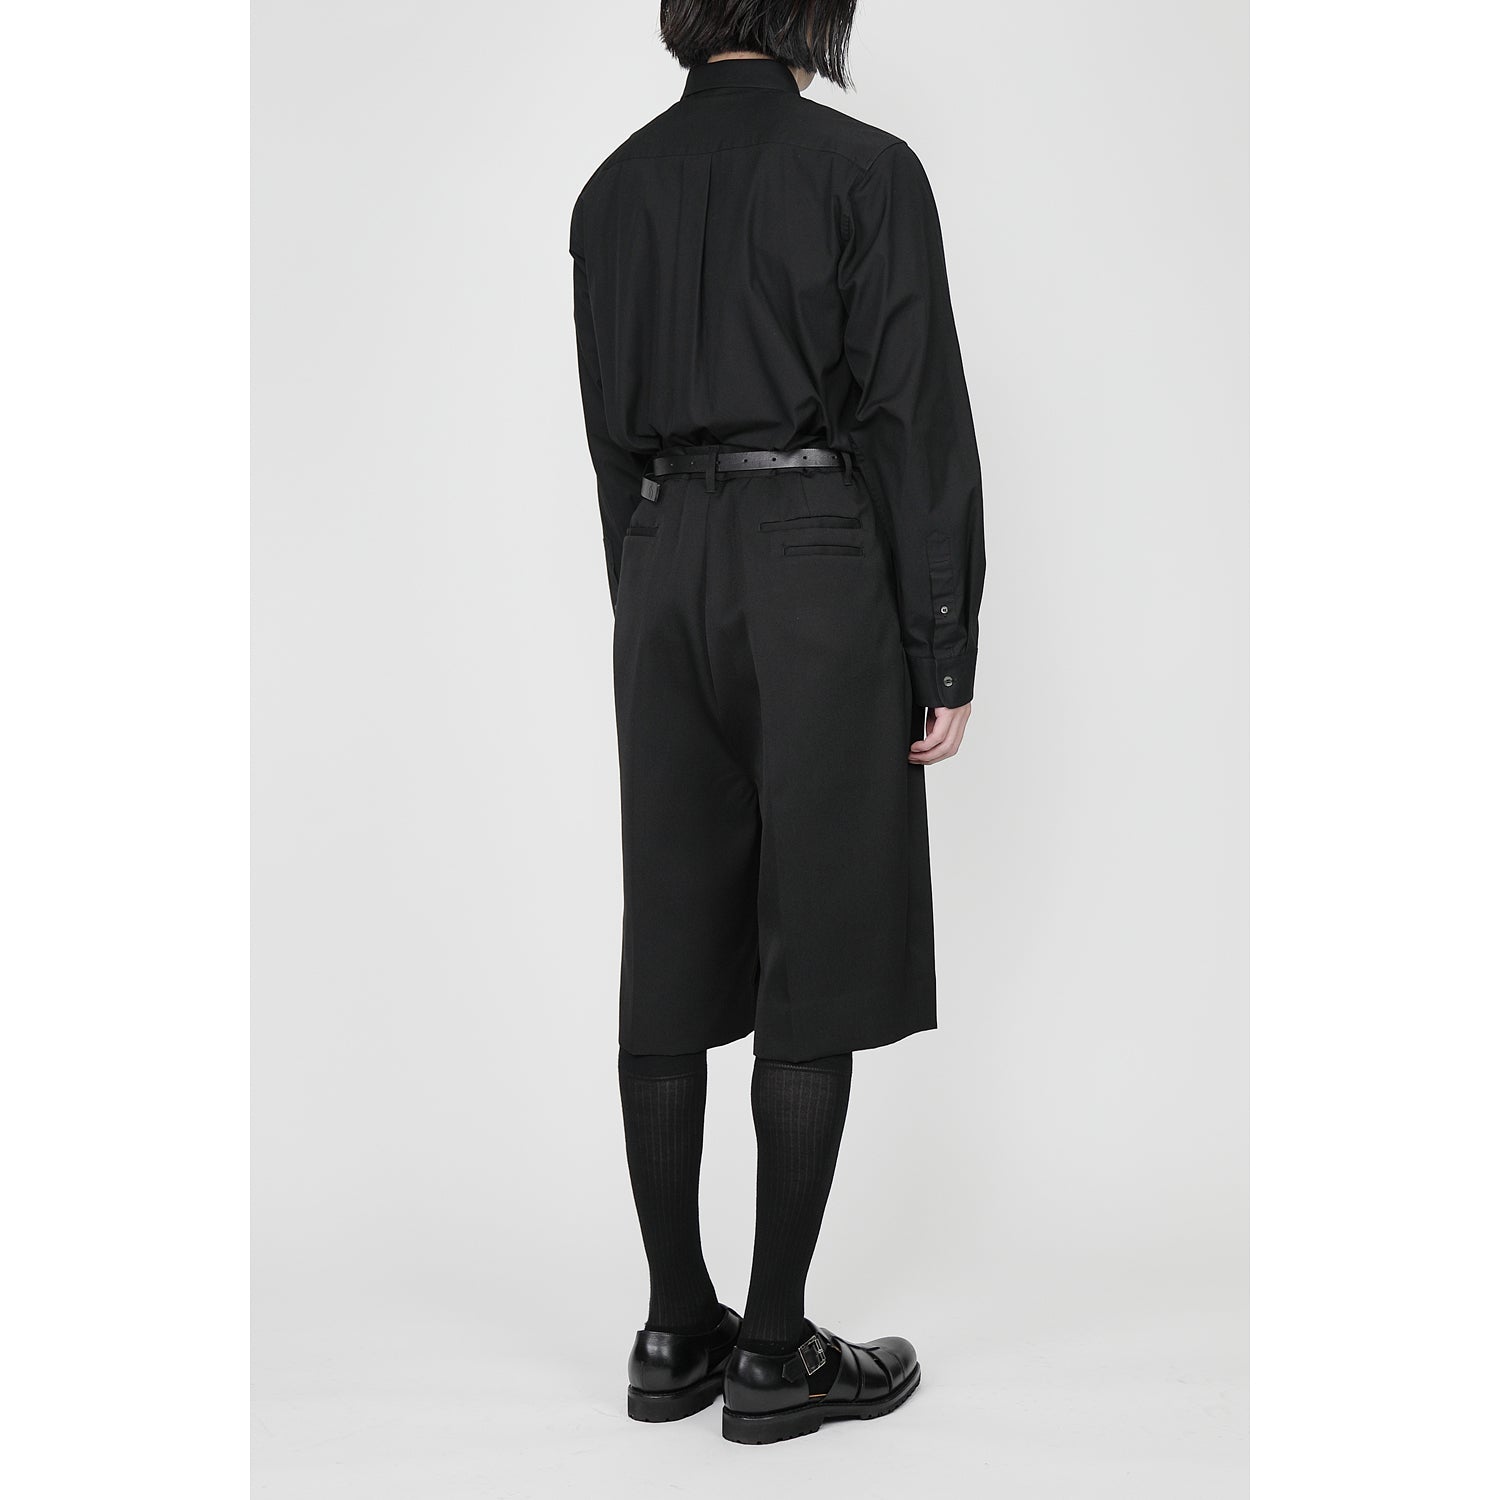 HENRI / Super Wide Tailored Shorts / black